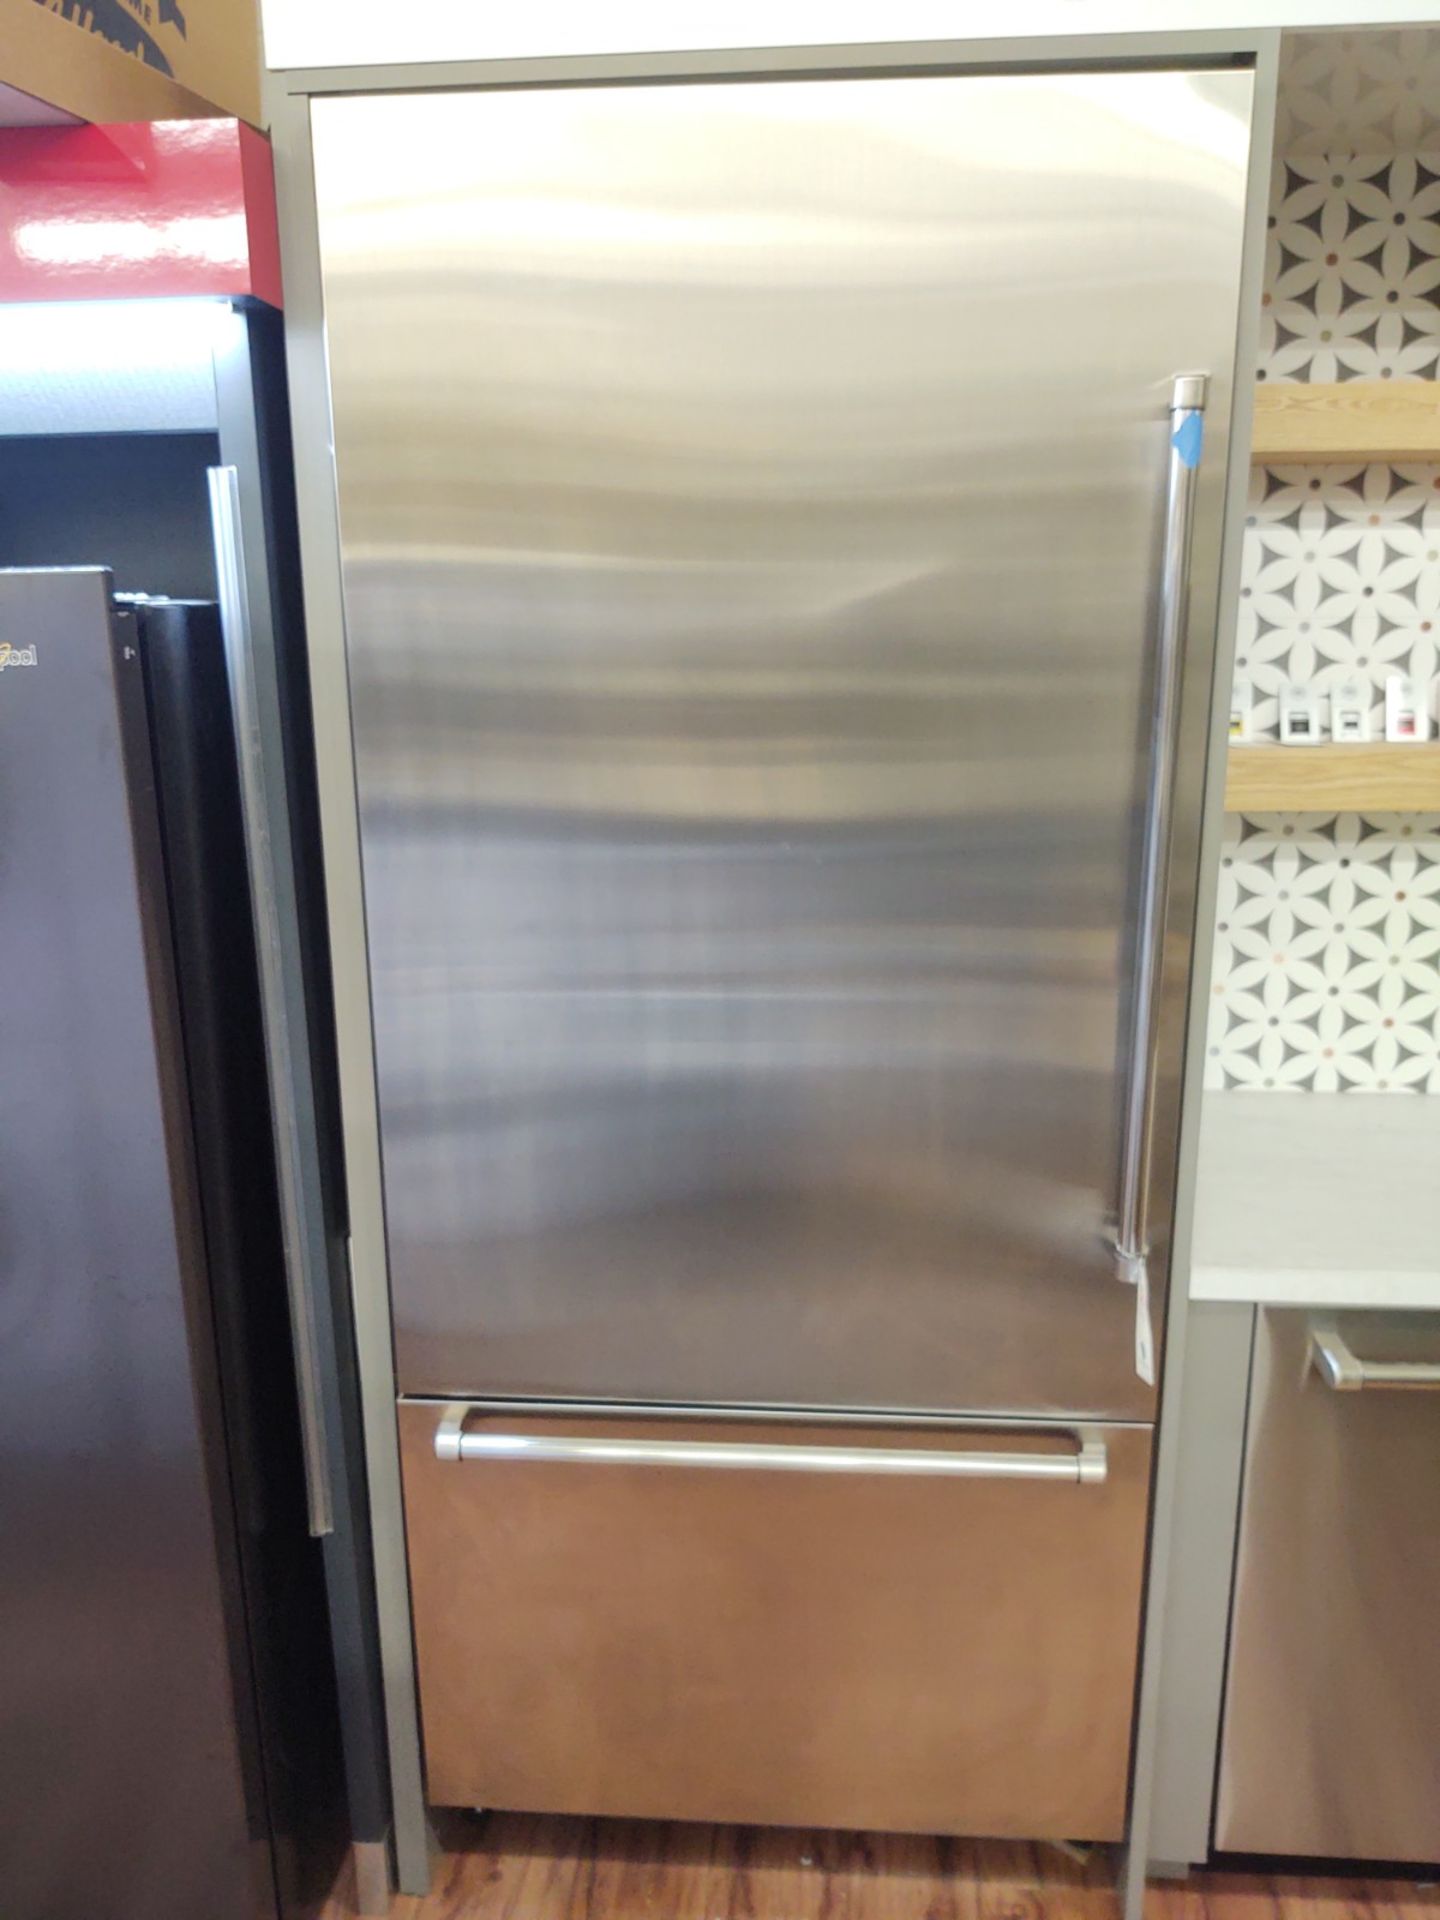 Bertazzoni 36" SS Freestanding French door Refrigerator #REF36DFZXNT, 83"H, (Missing Kick Panel)